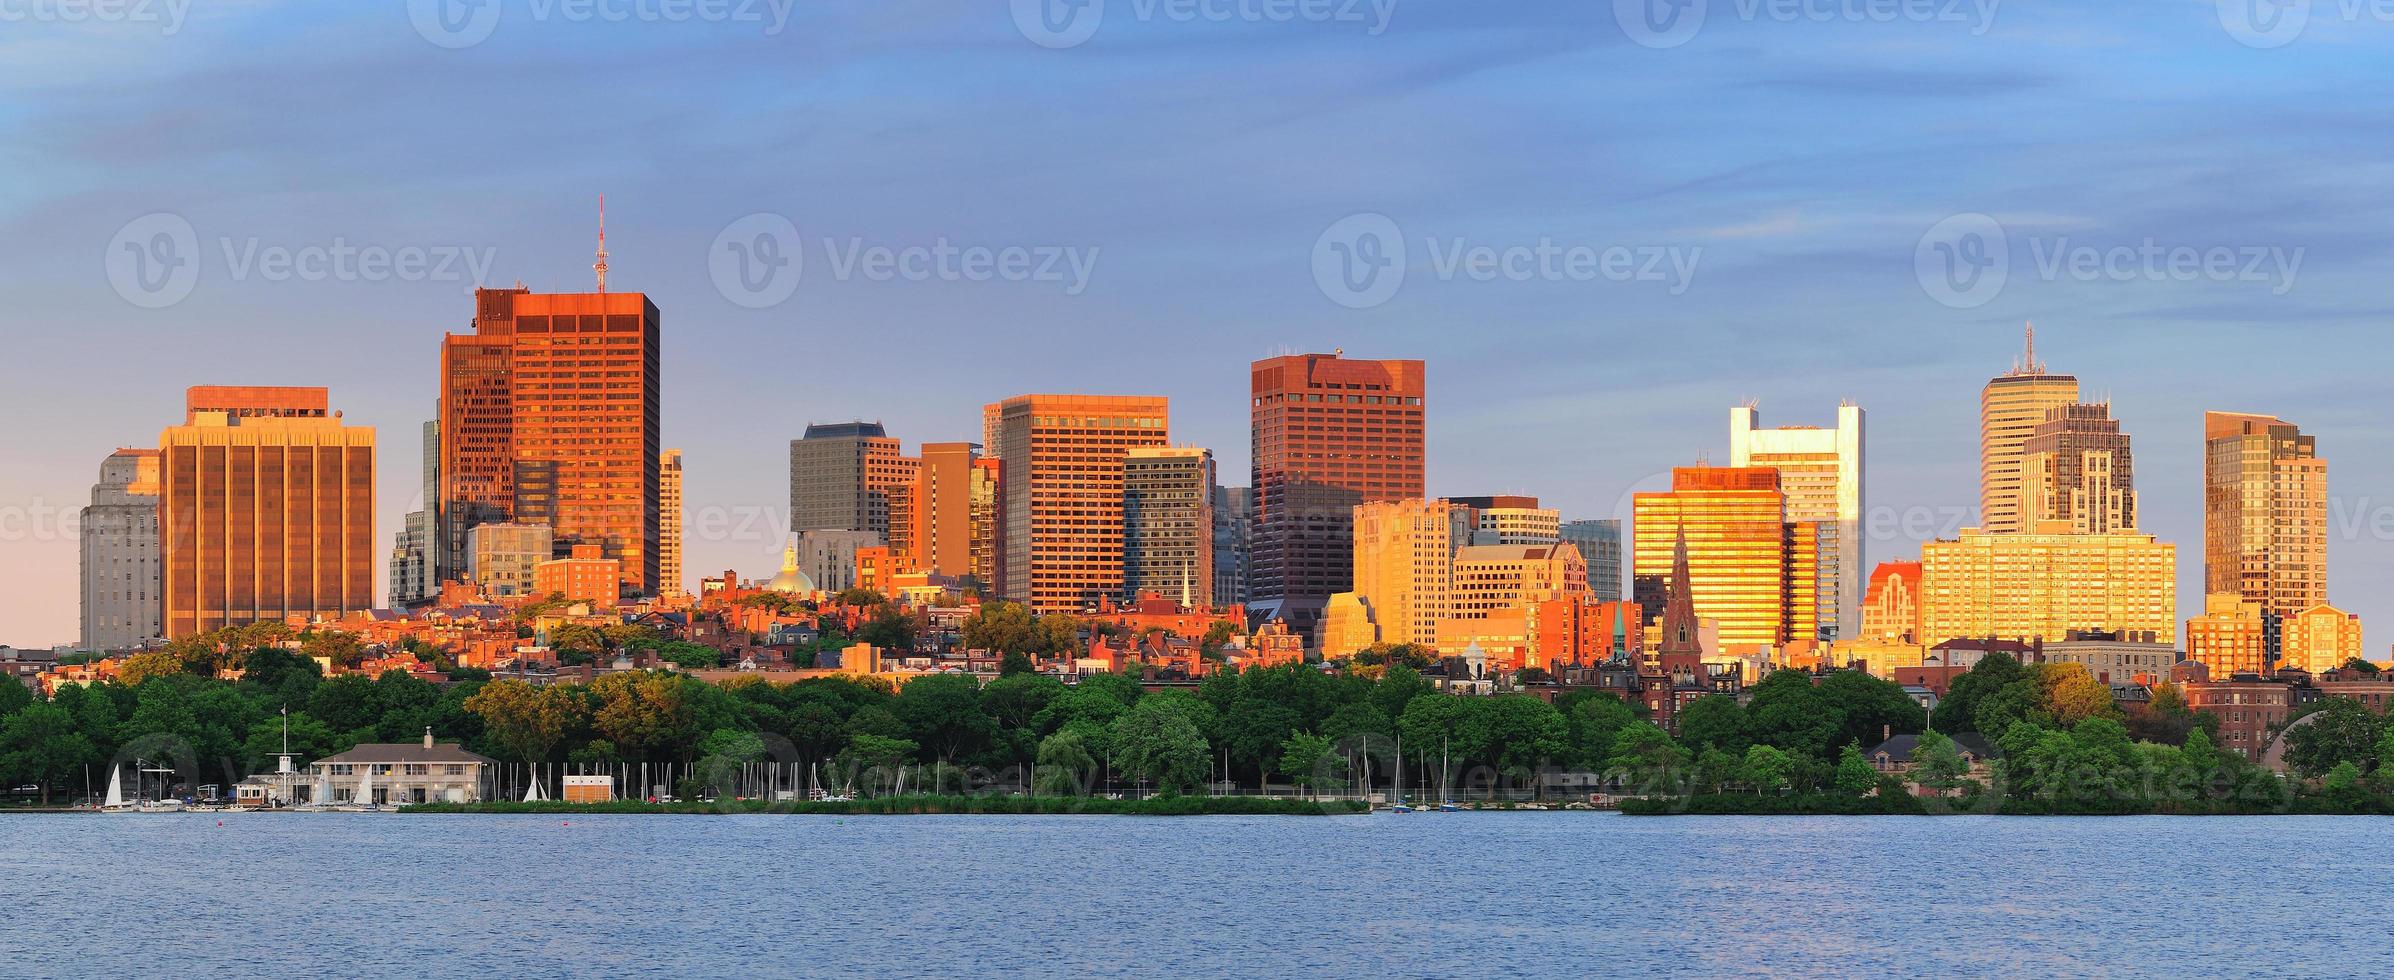 panorama del paisaje urbano de boston foto